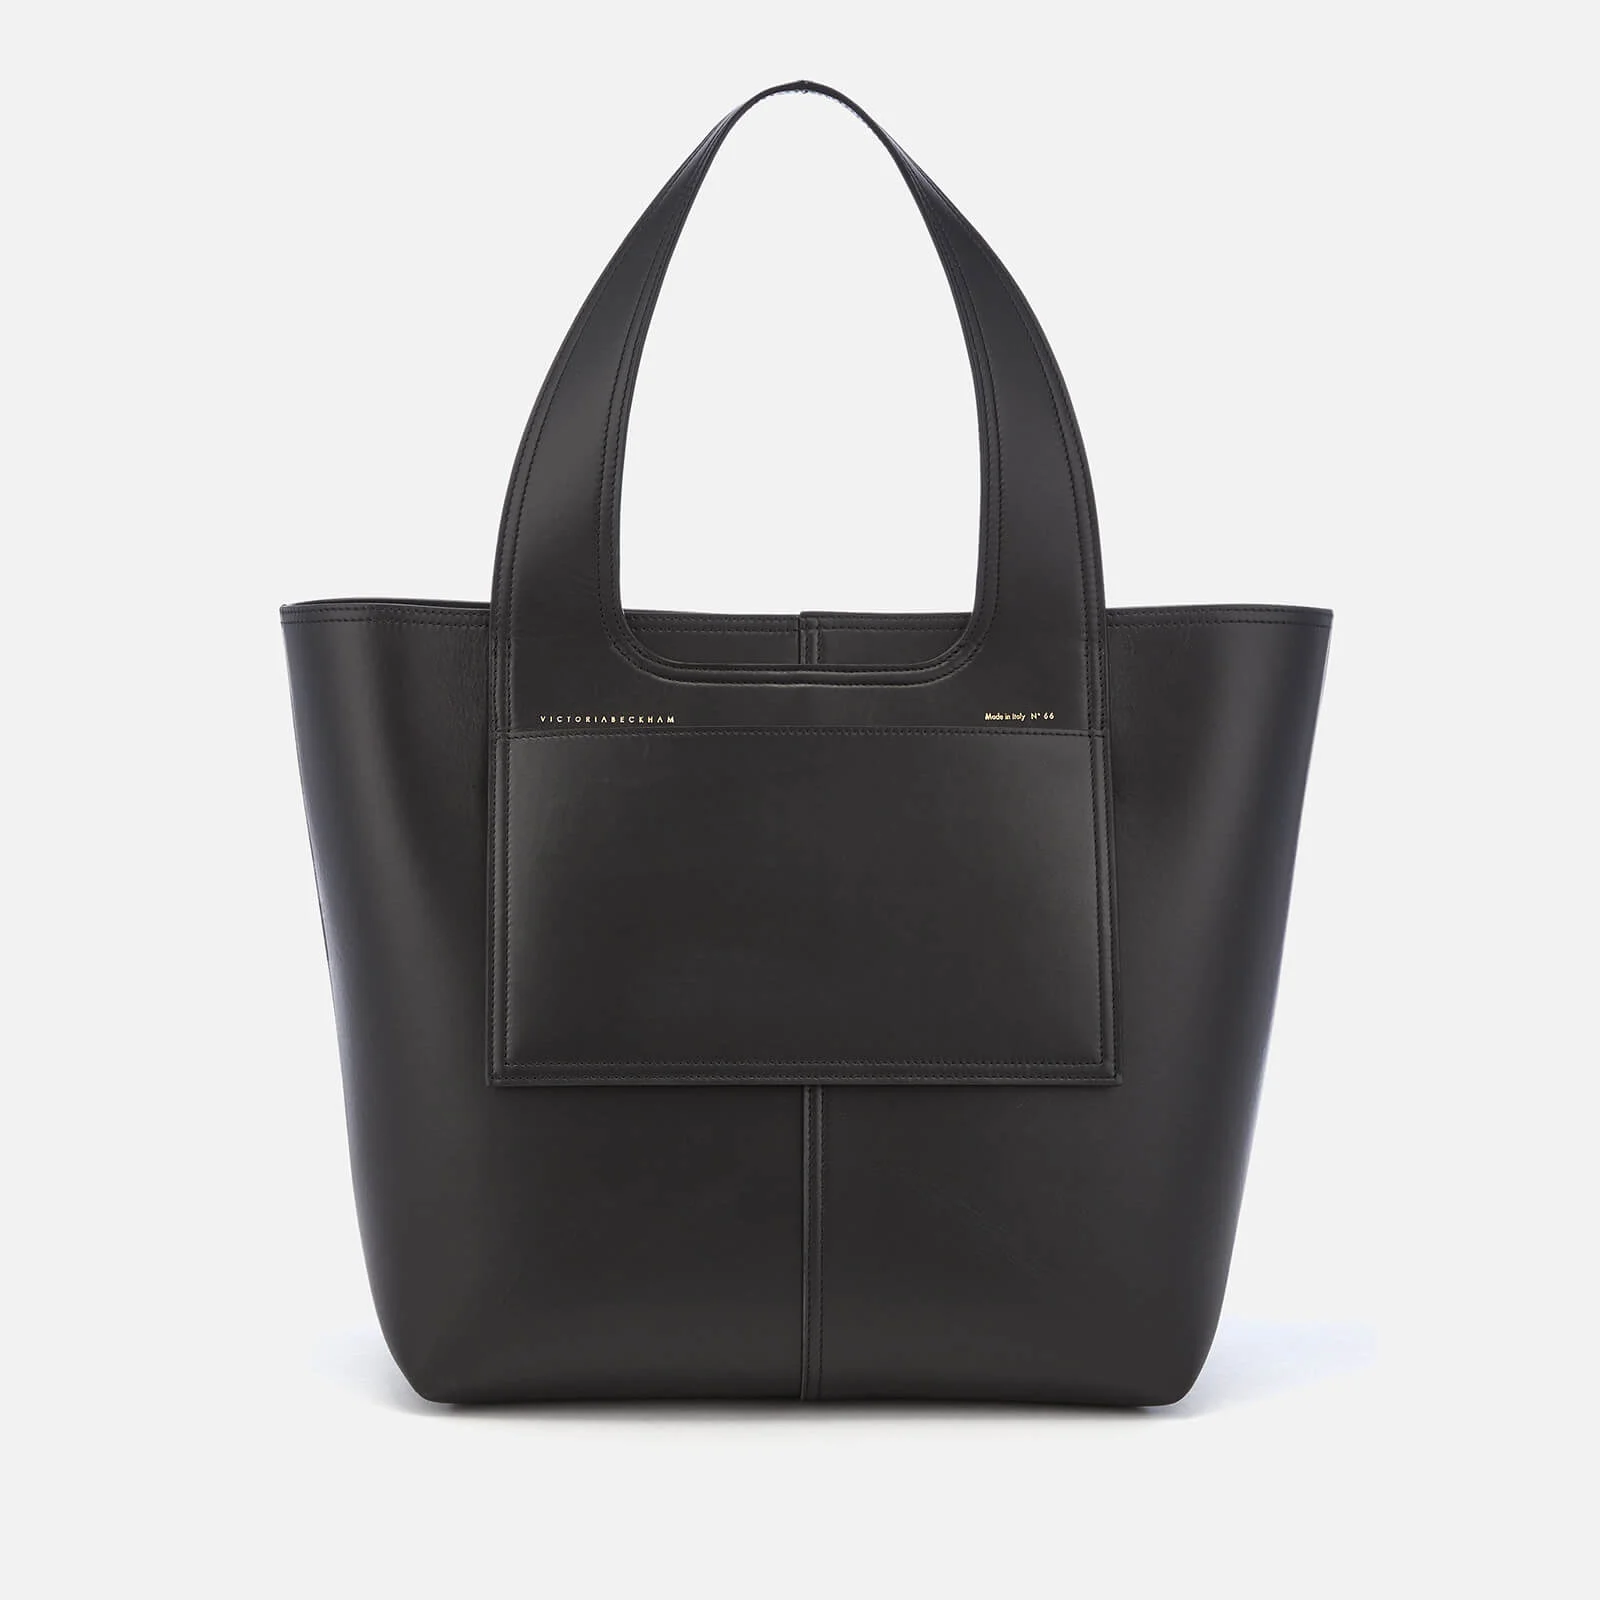 Victoria Beckham Women's Apron Tote Bag - Black Image 1